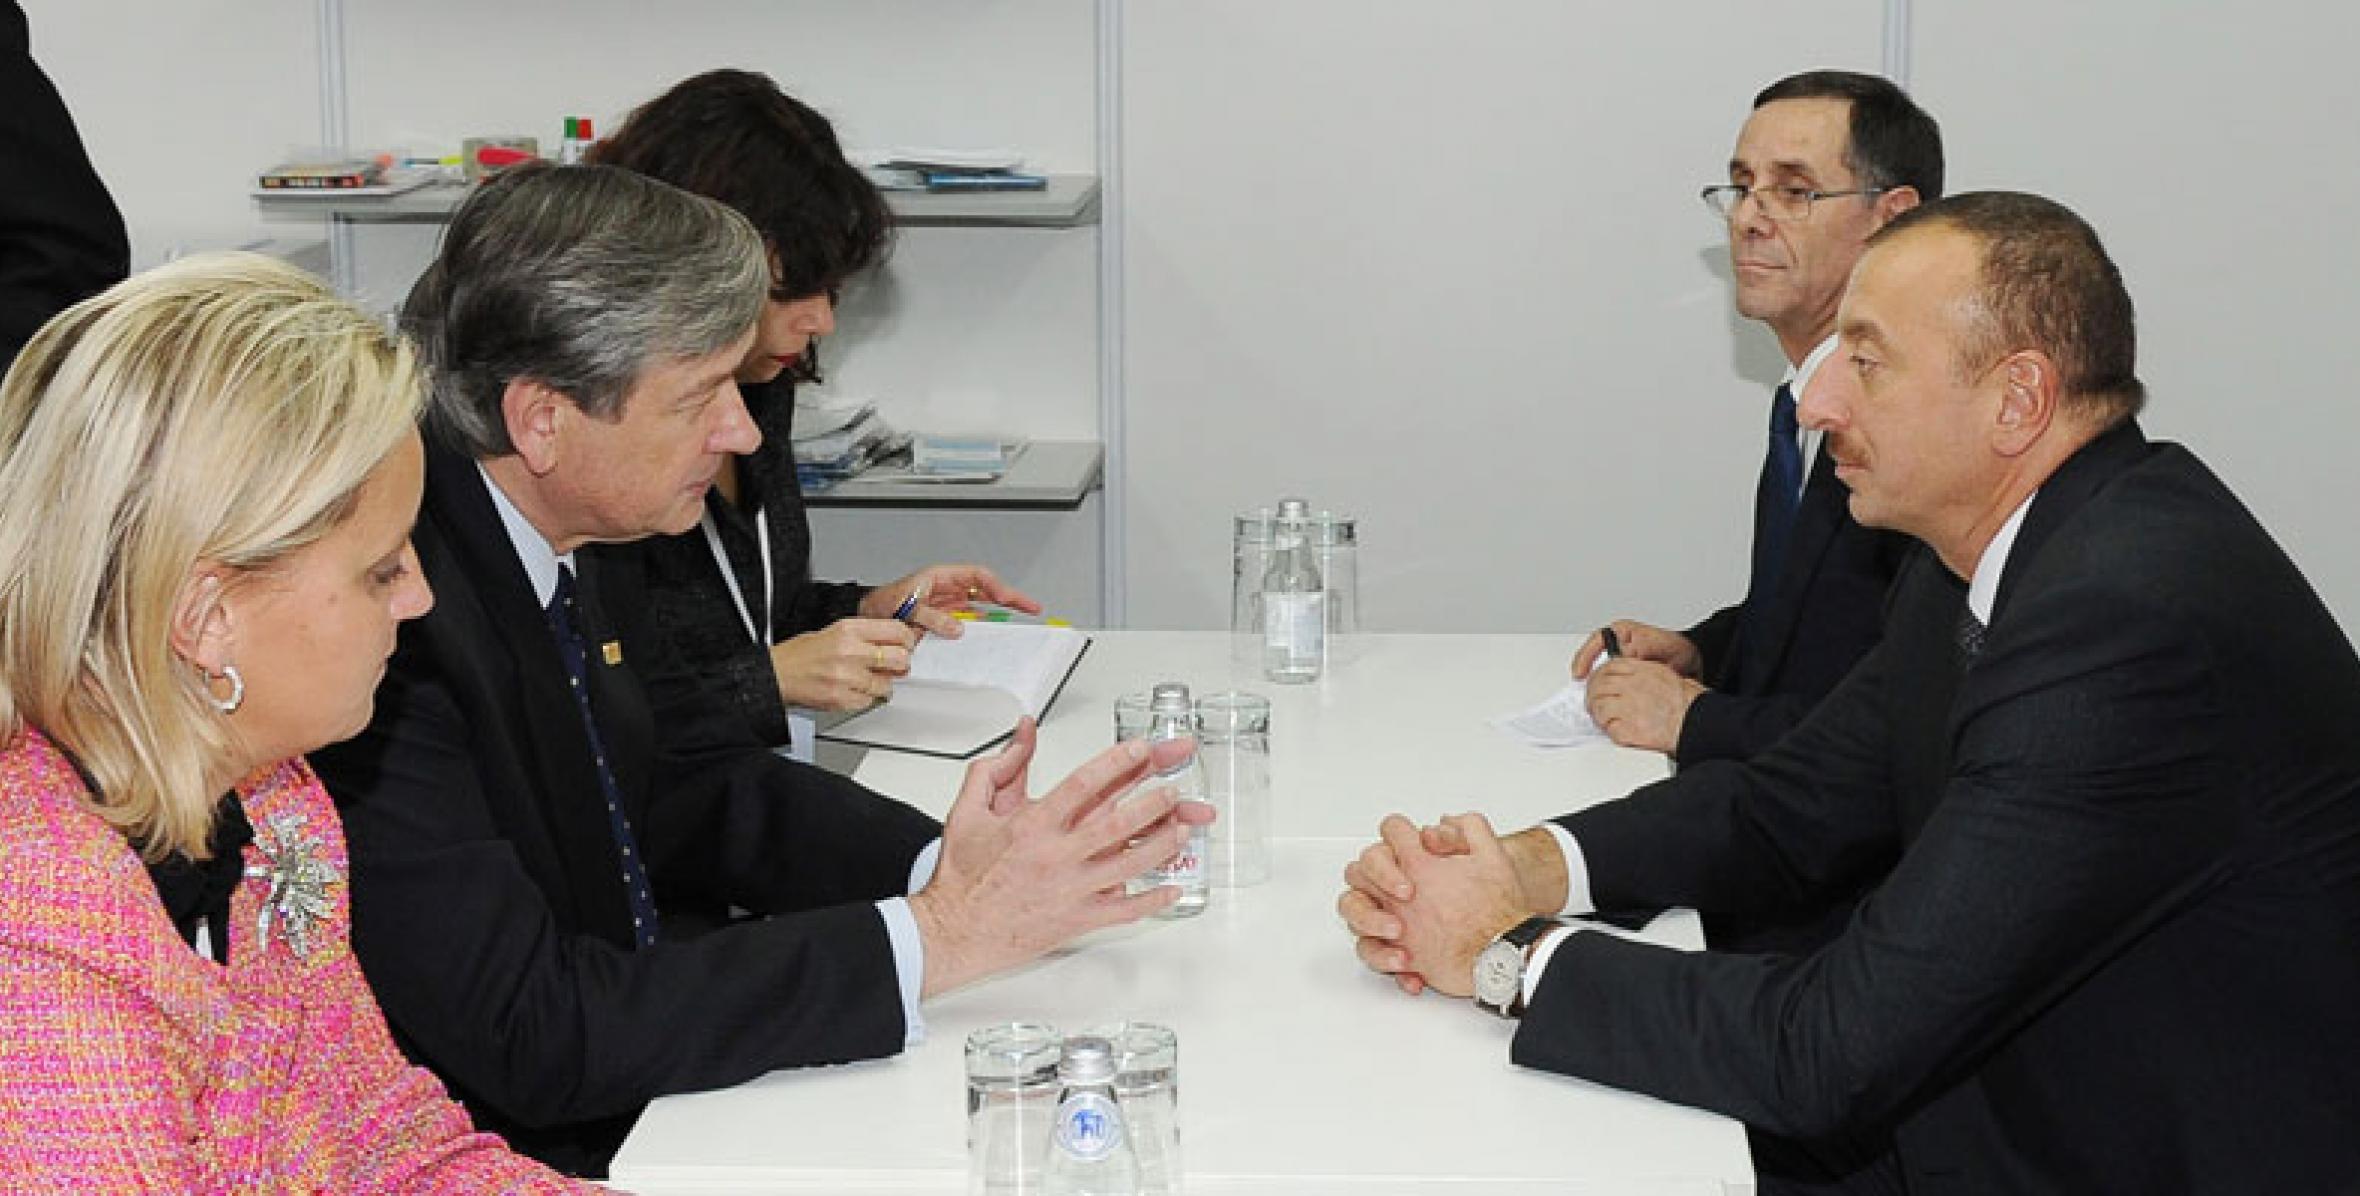 Ilham Aliyev had a meeting with President of Slovenia Danilo Turk